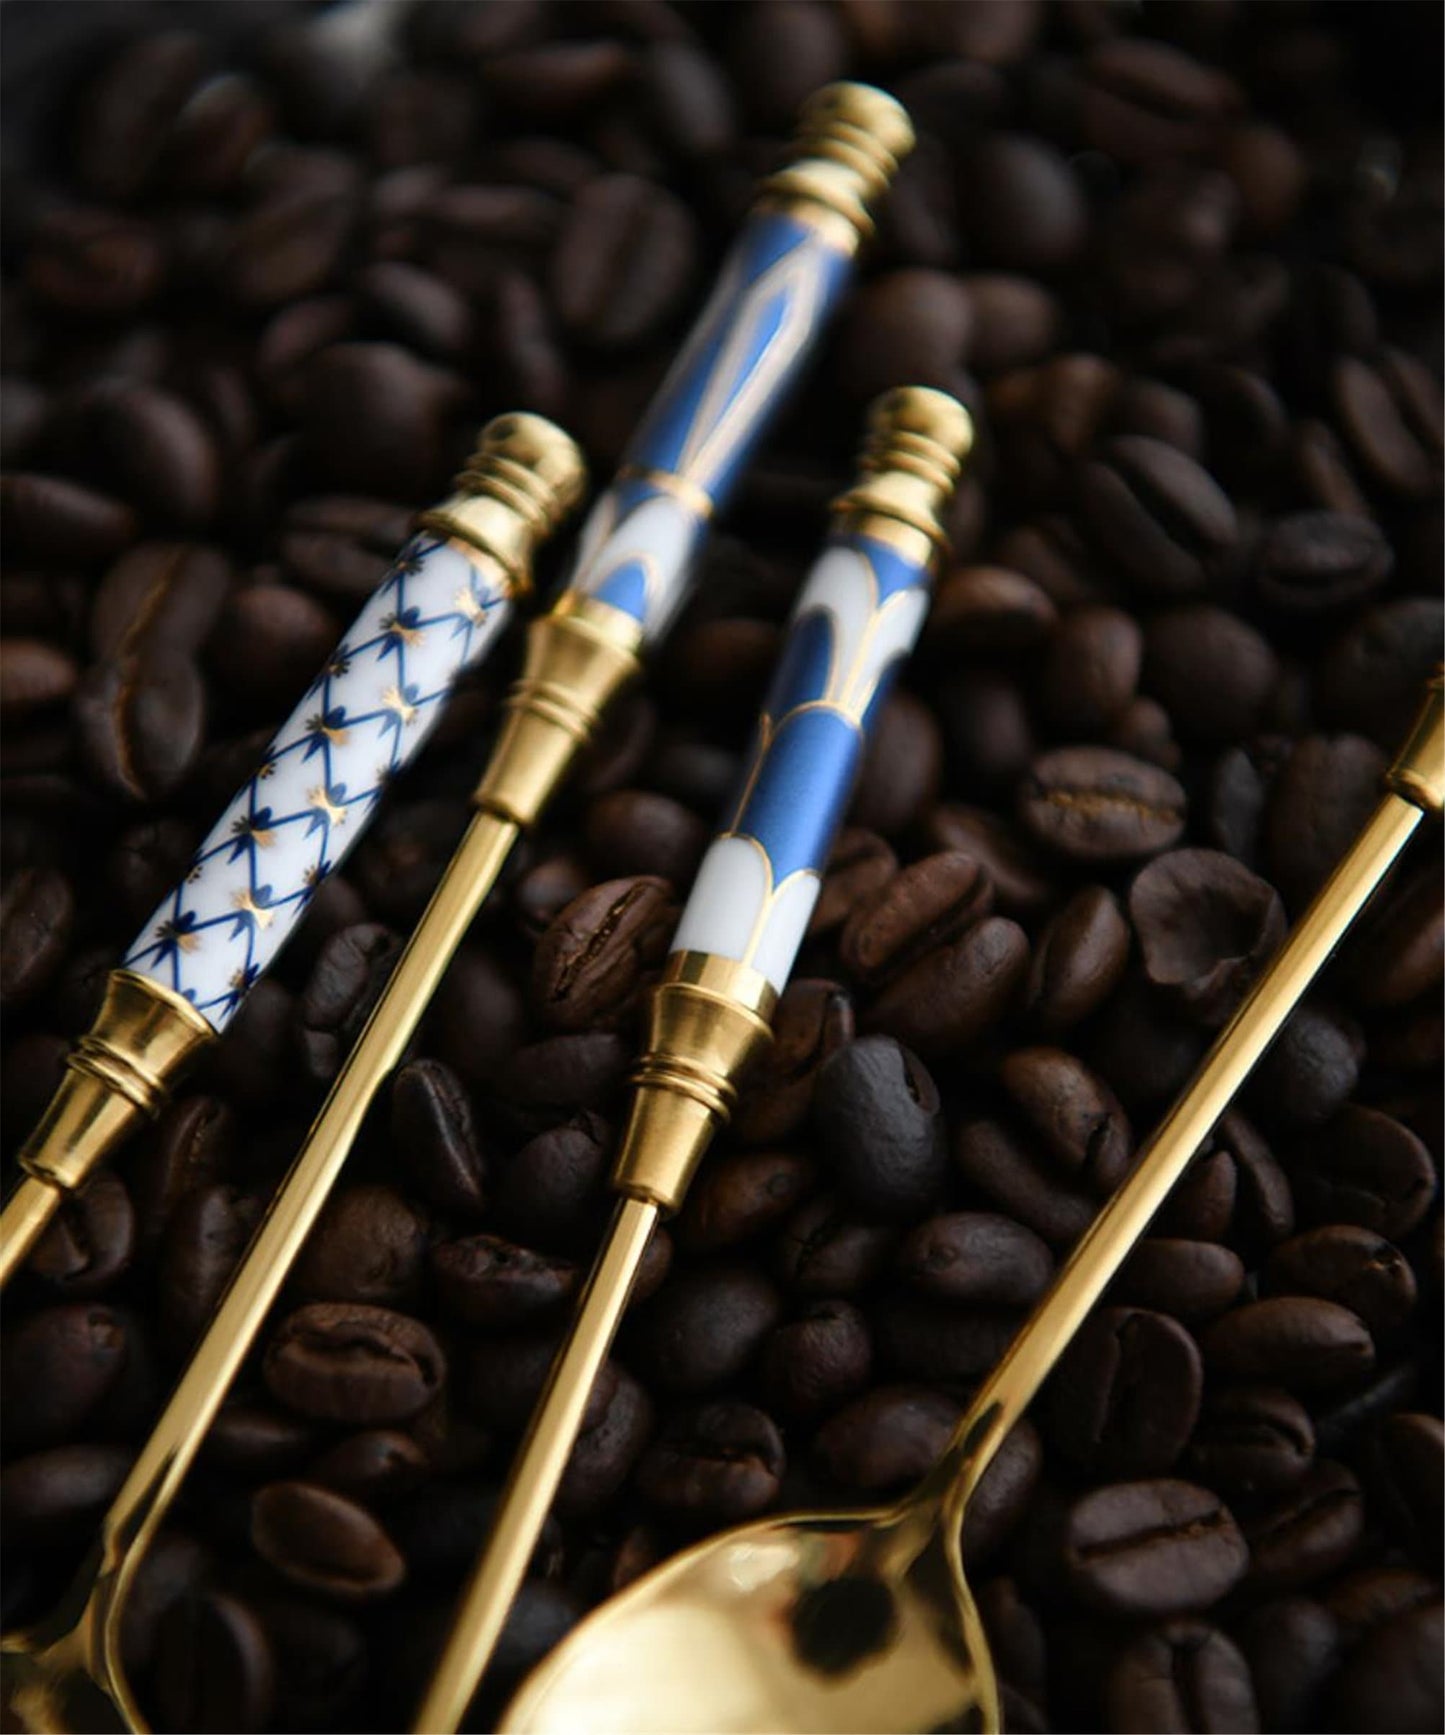 Stainless Steel Spoon, Blue Ceramic Tea Coffee Spoon